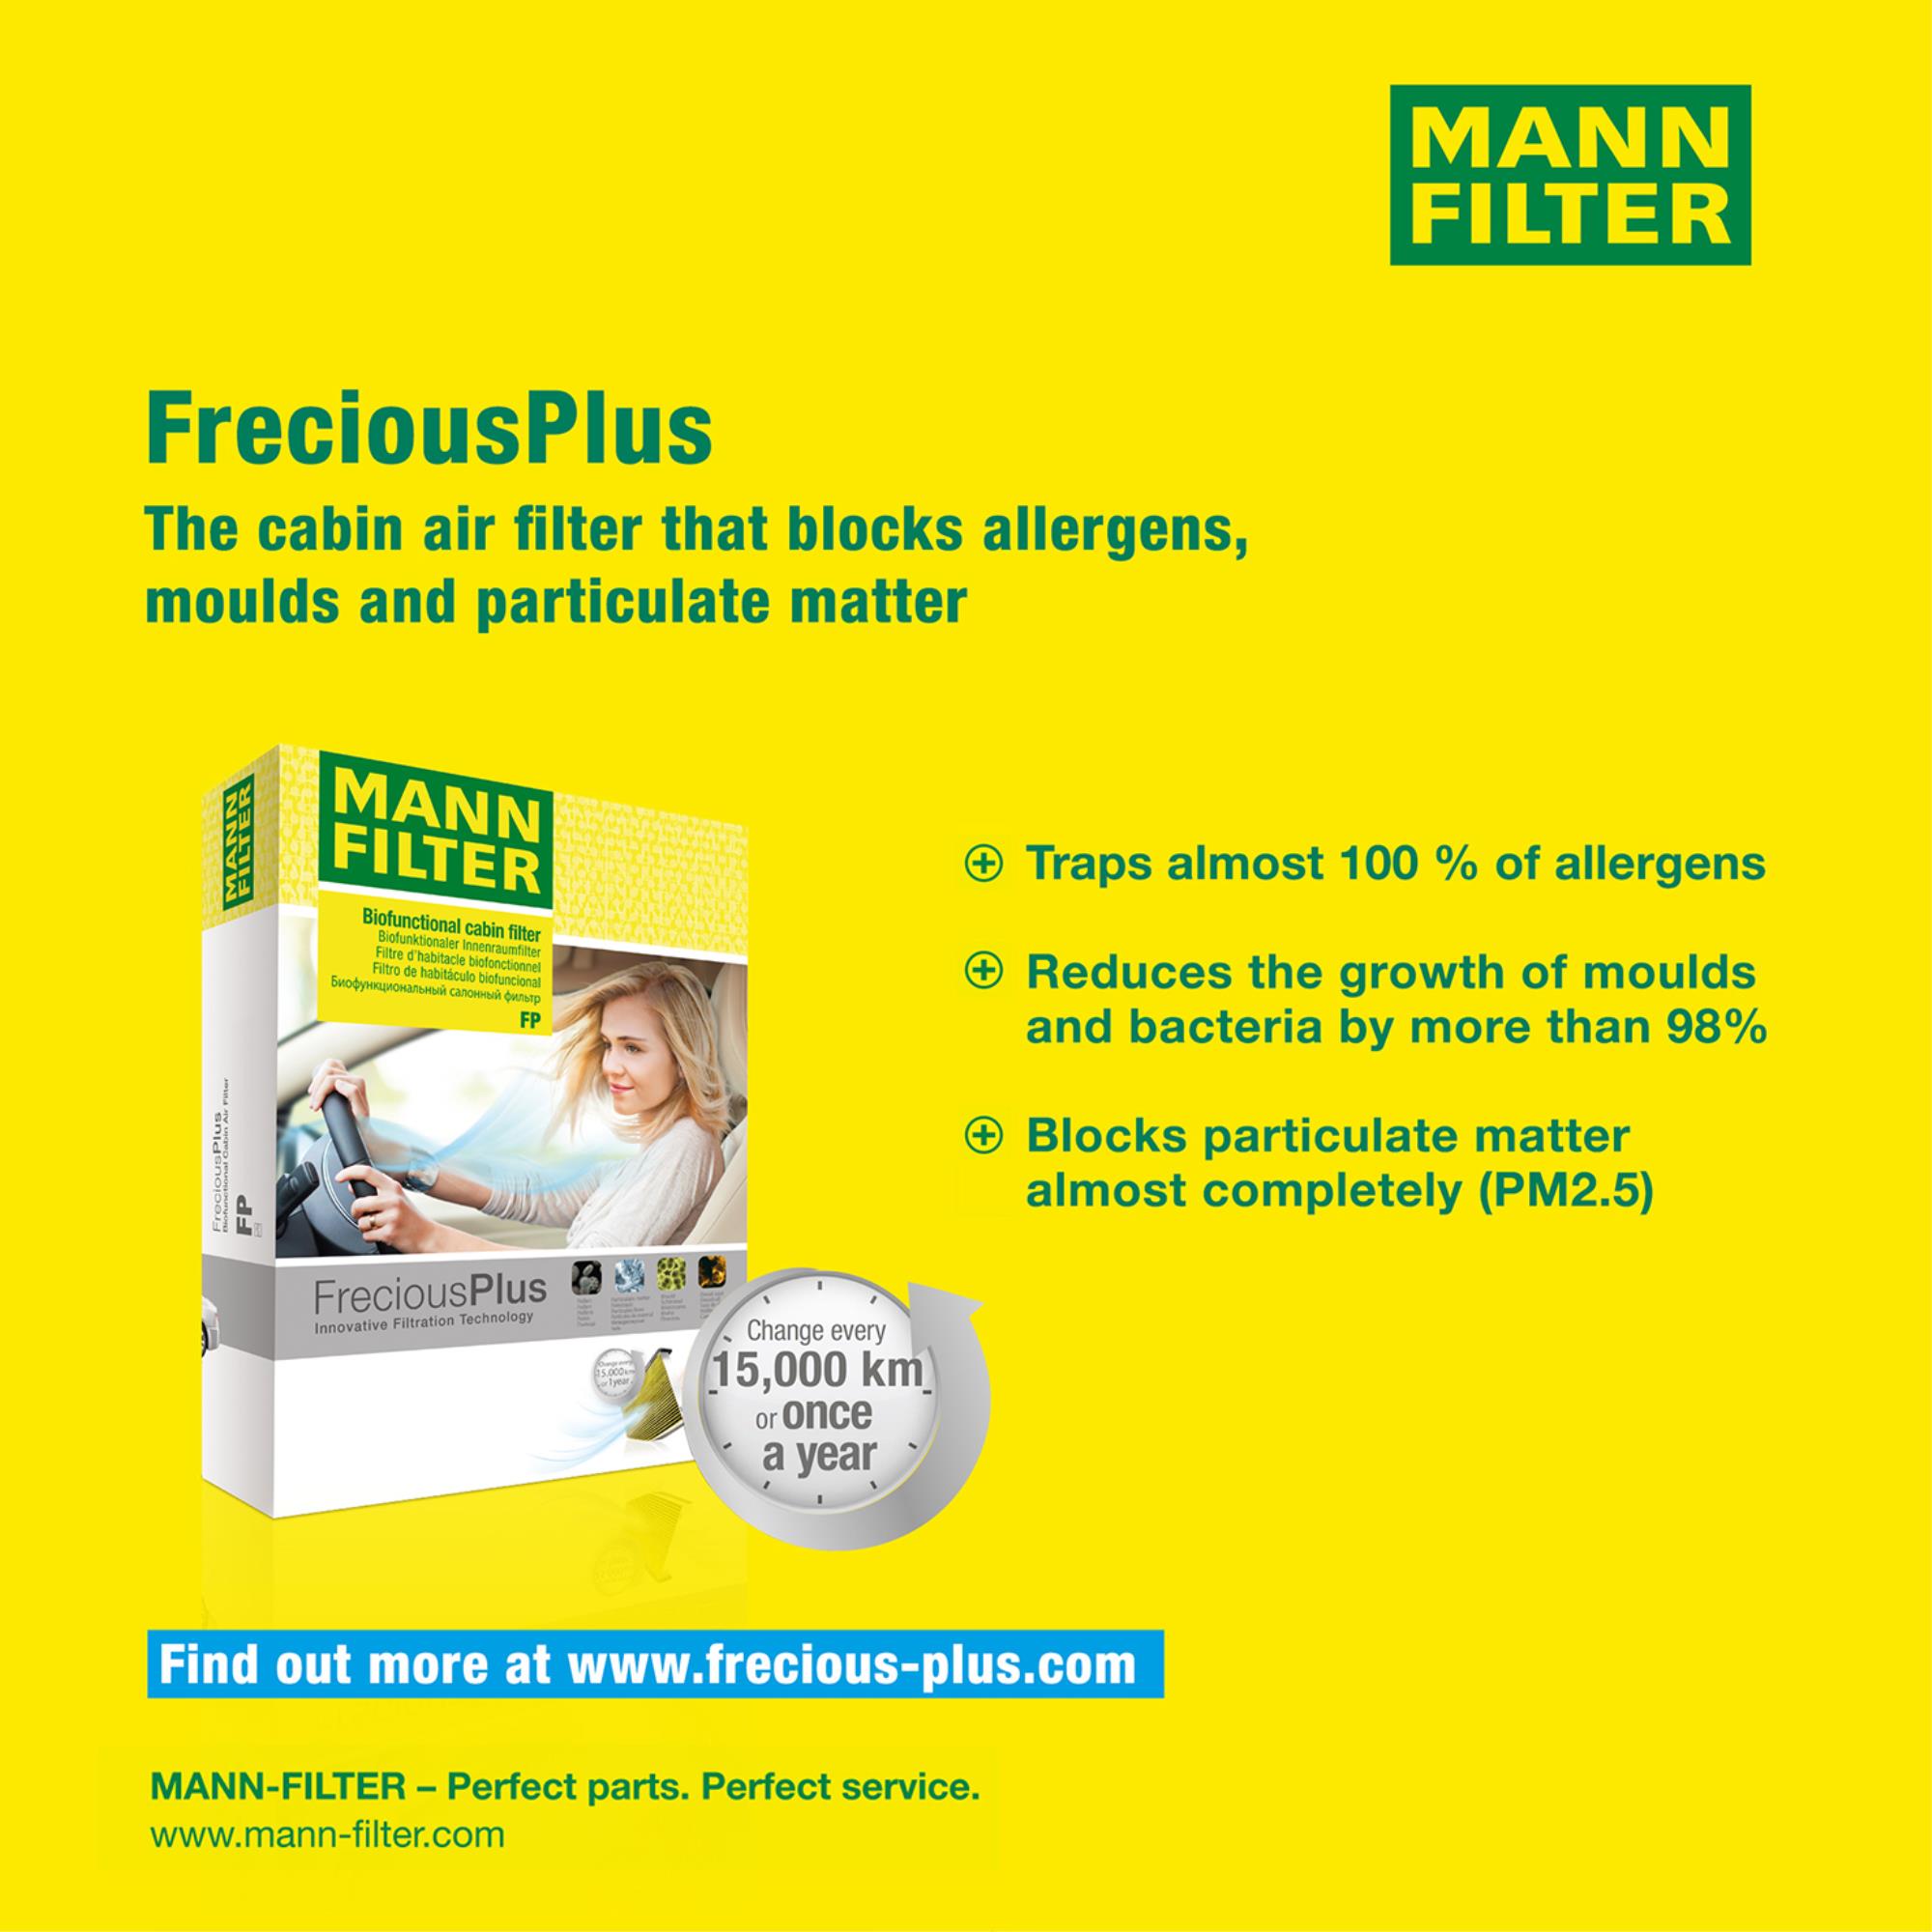 MANN-Filter Innenraumfilter Biofunctional für Allergiker FP 2641